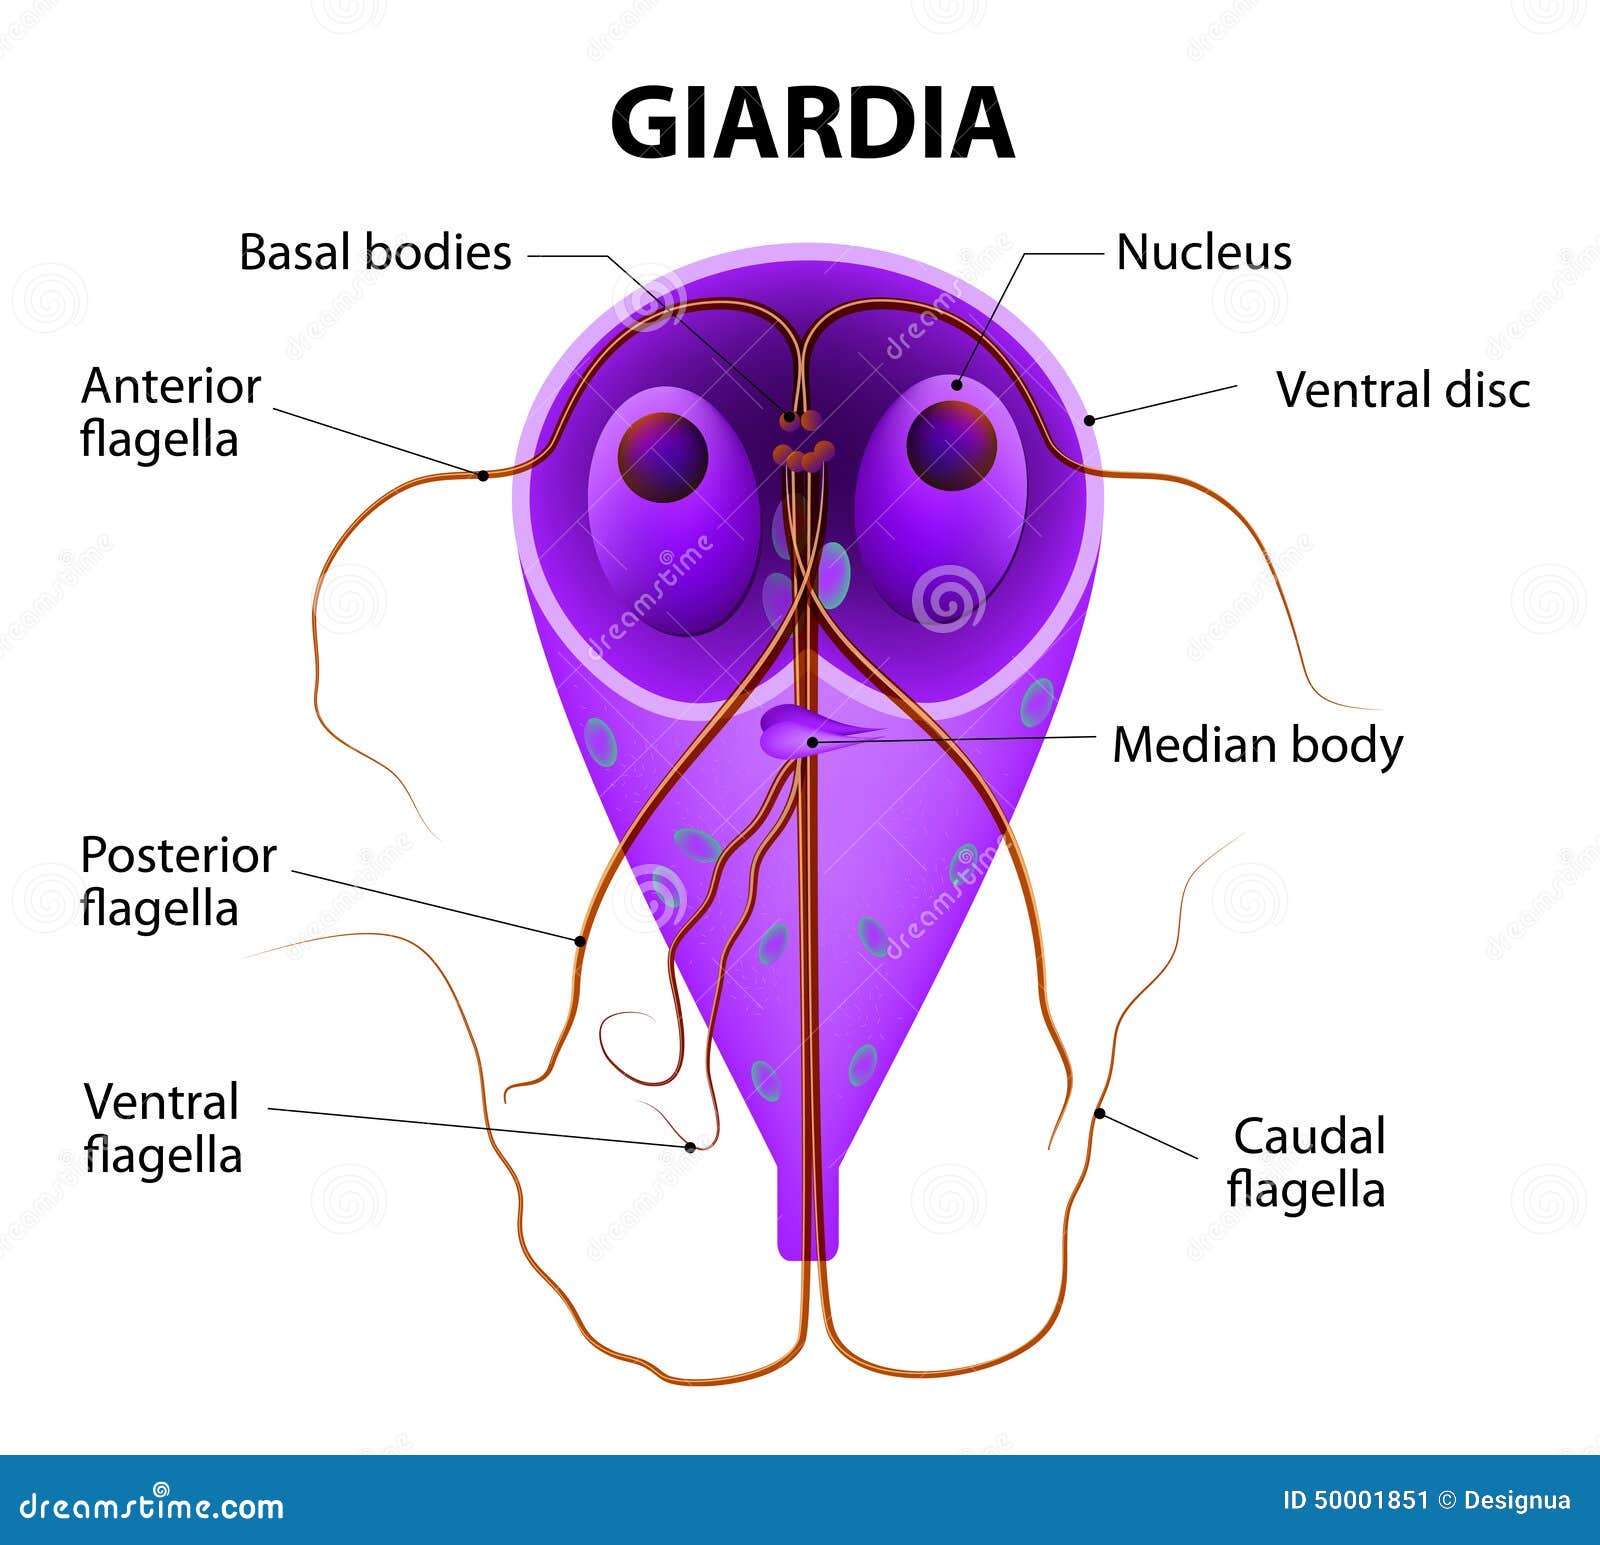 Gyomor-bélhurut - Giardia duodenalis prévention